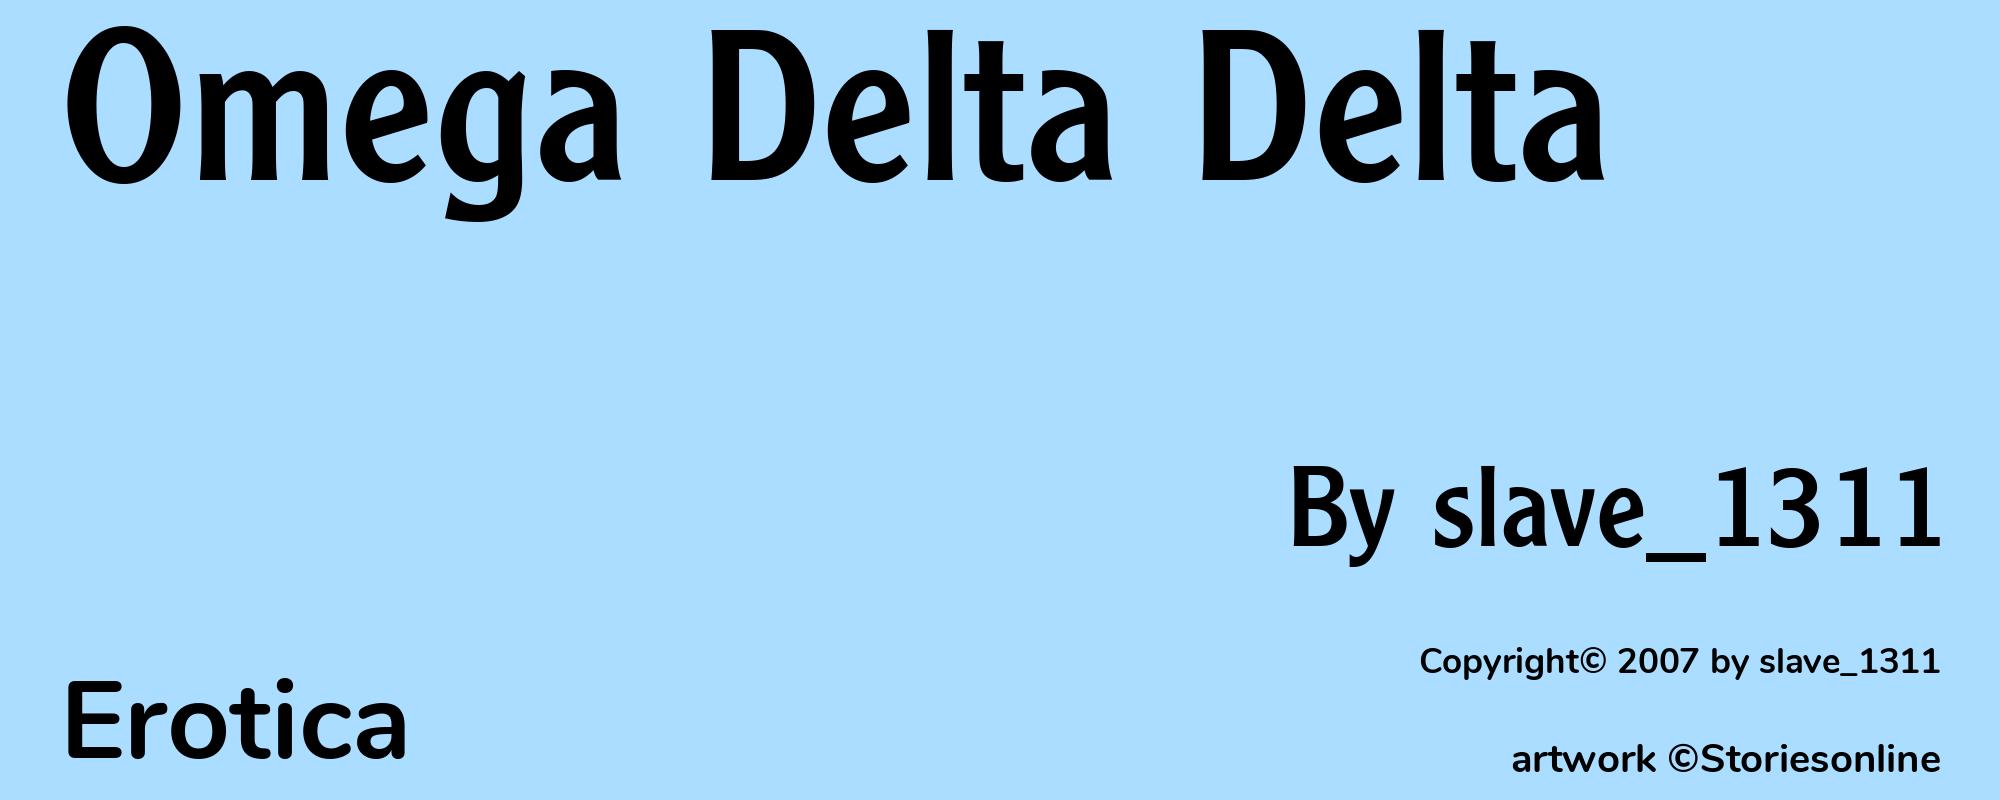 Omega Delta Delta - Cover